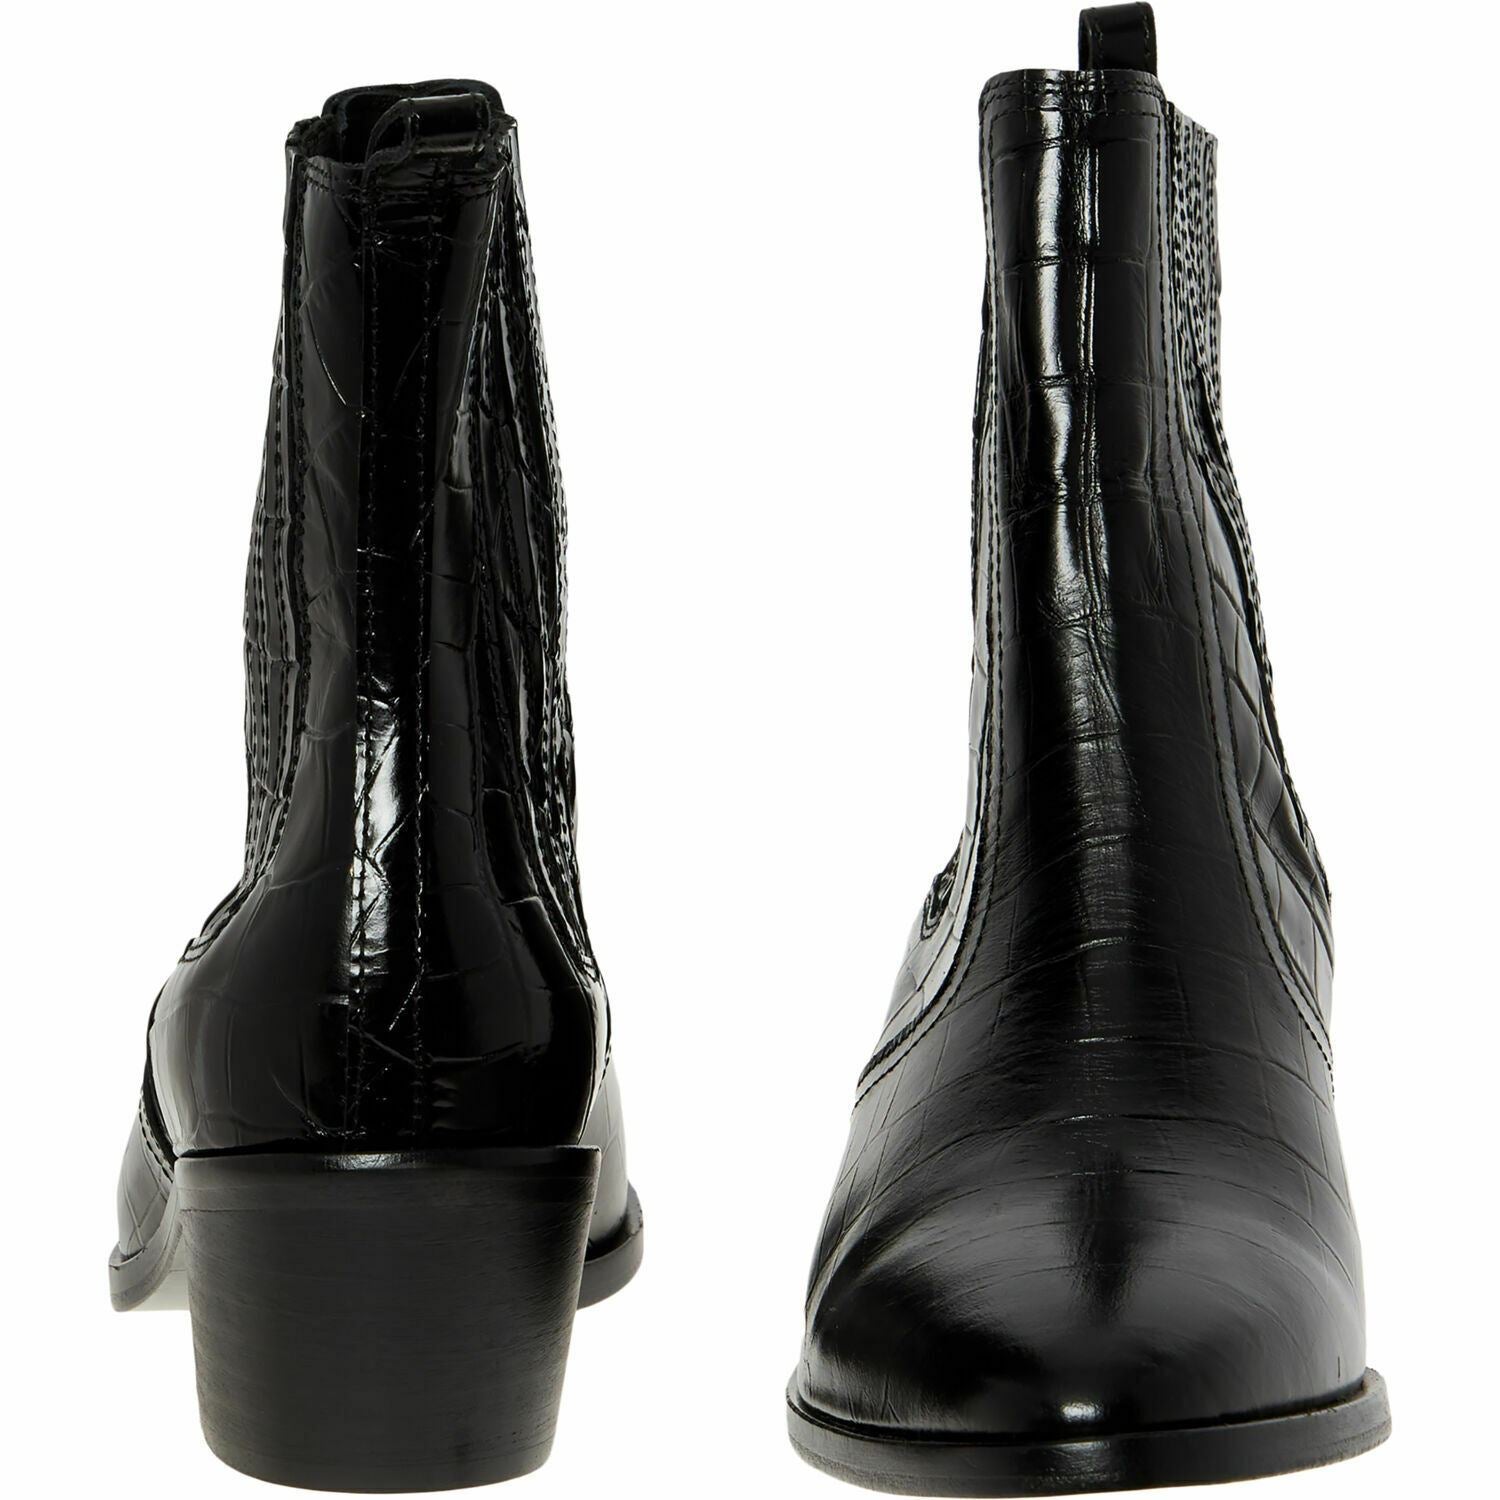 ALLSAINTS Women's MIRIAM CROCO Genuine Leather Boots, Black, UK 4 / EU 37